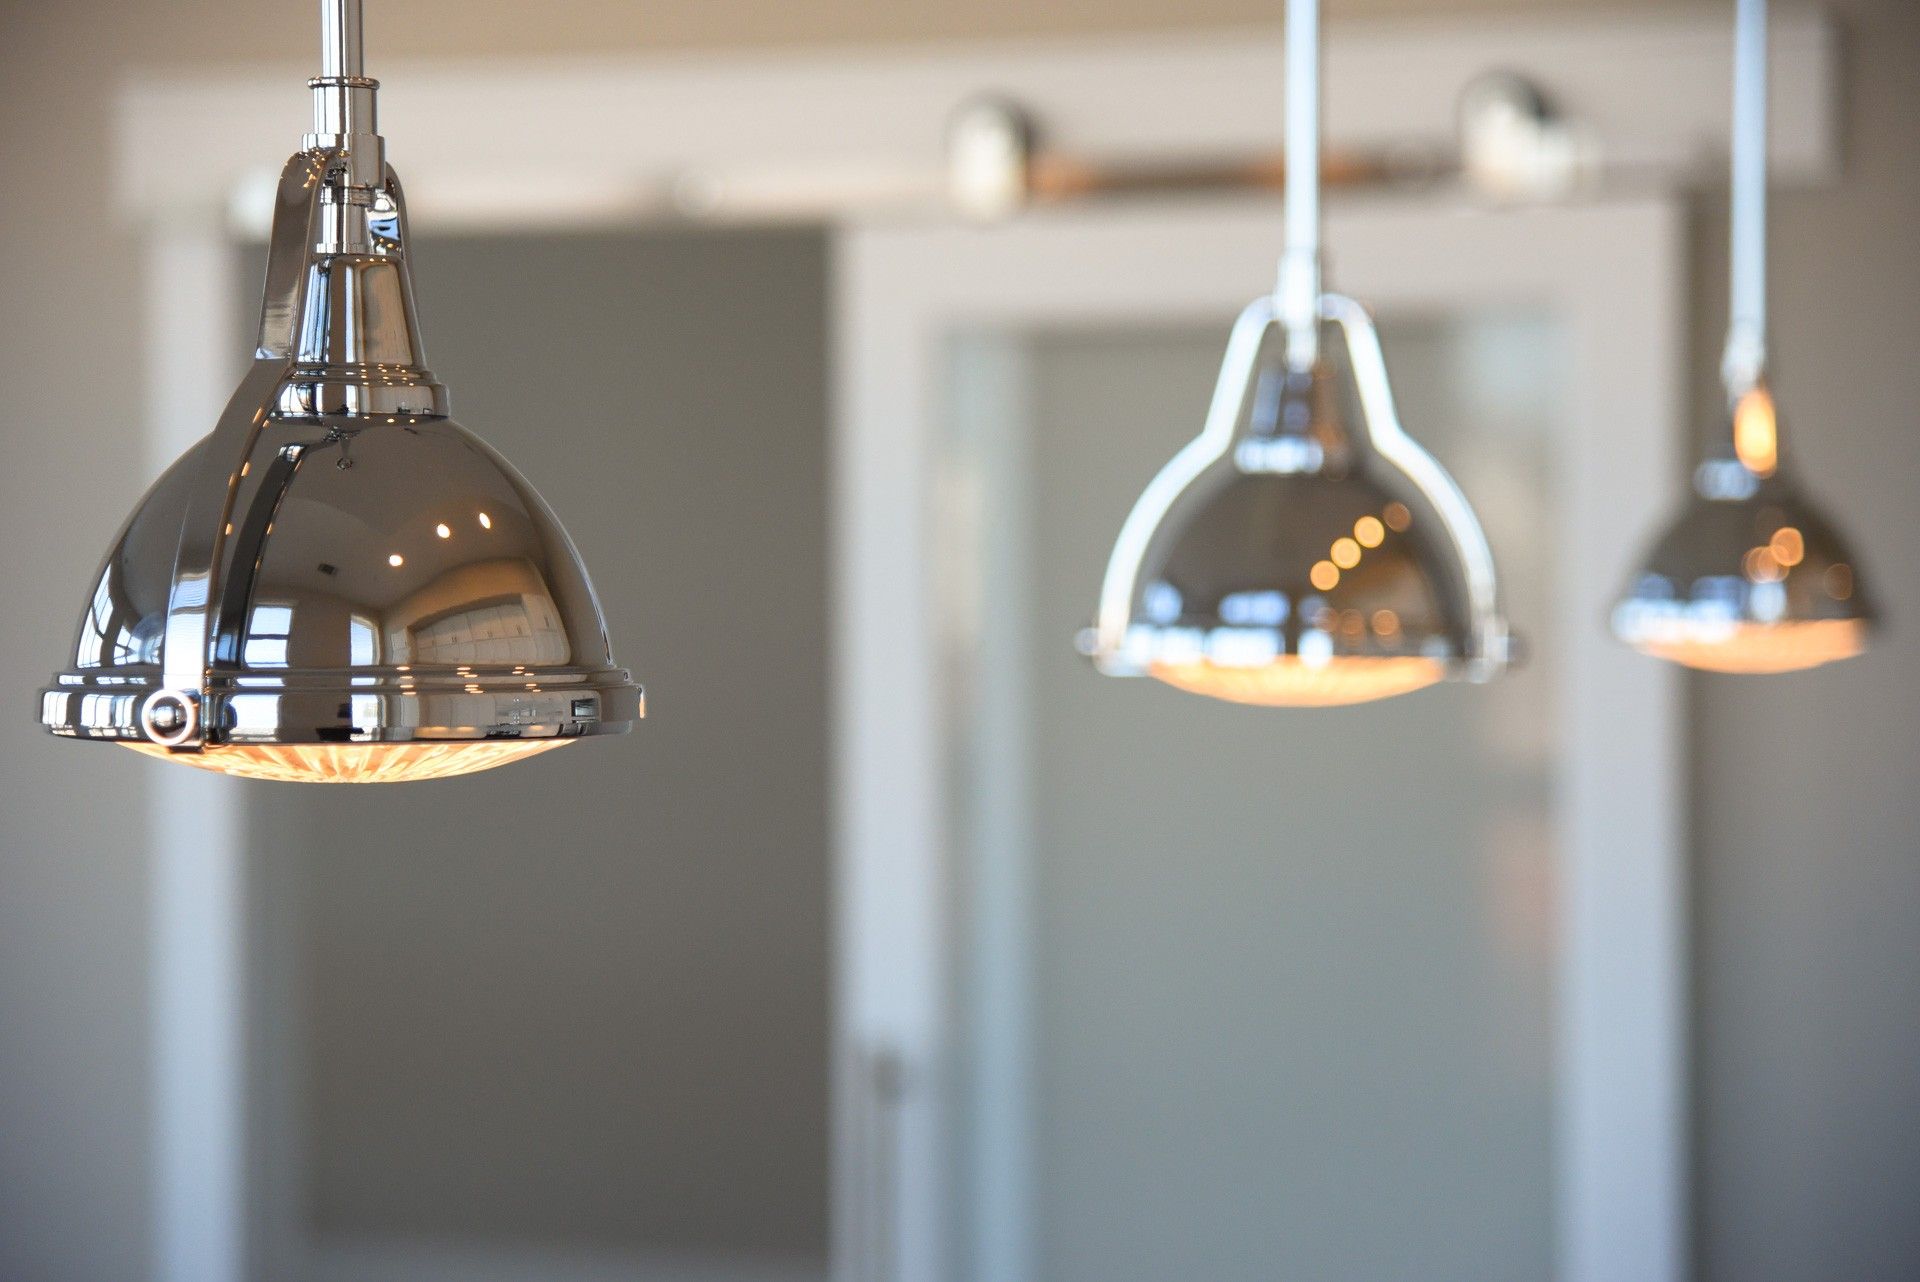 Van Alen plaza apartments kitchen pendant lighting